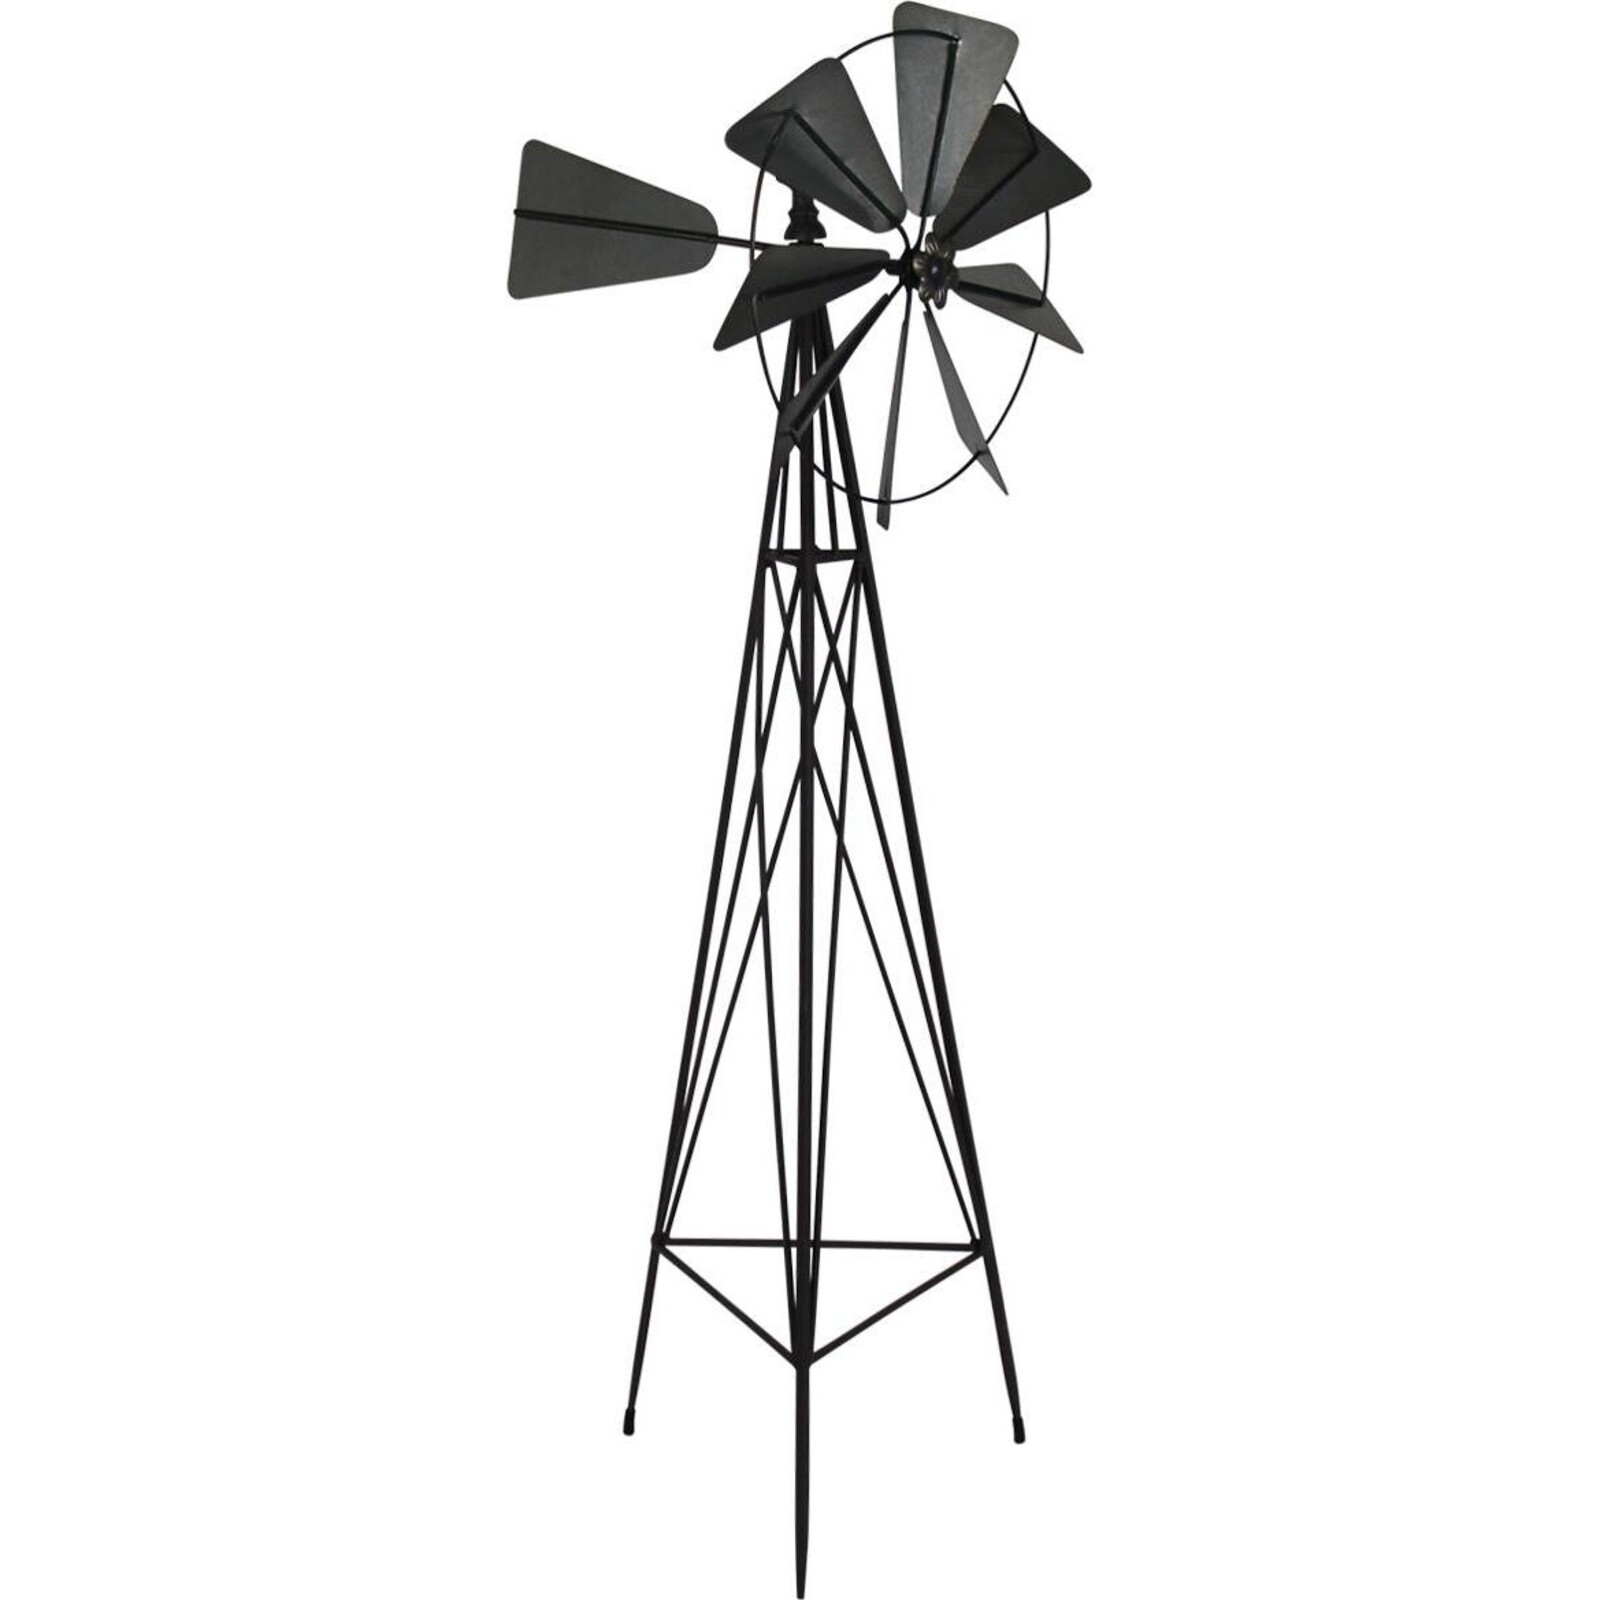 Standing Windmill 